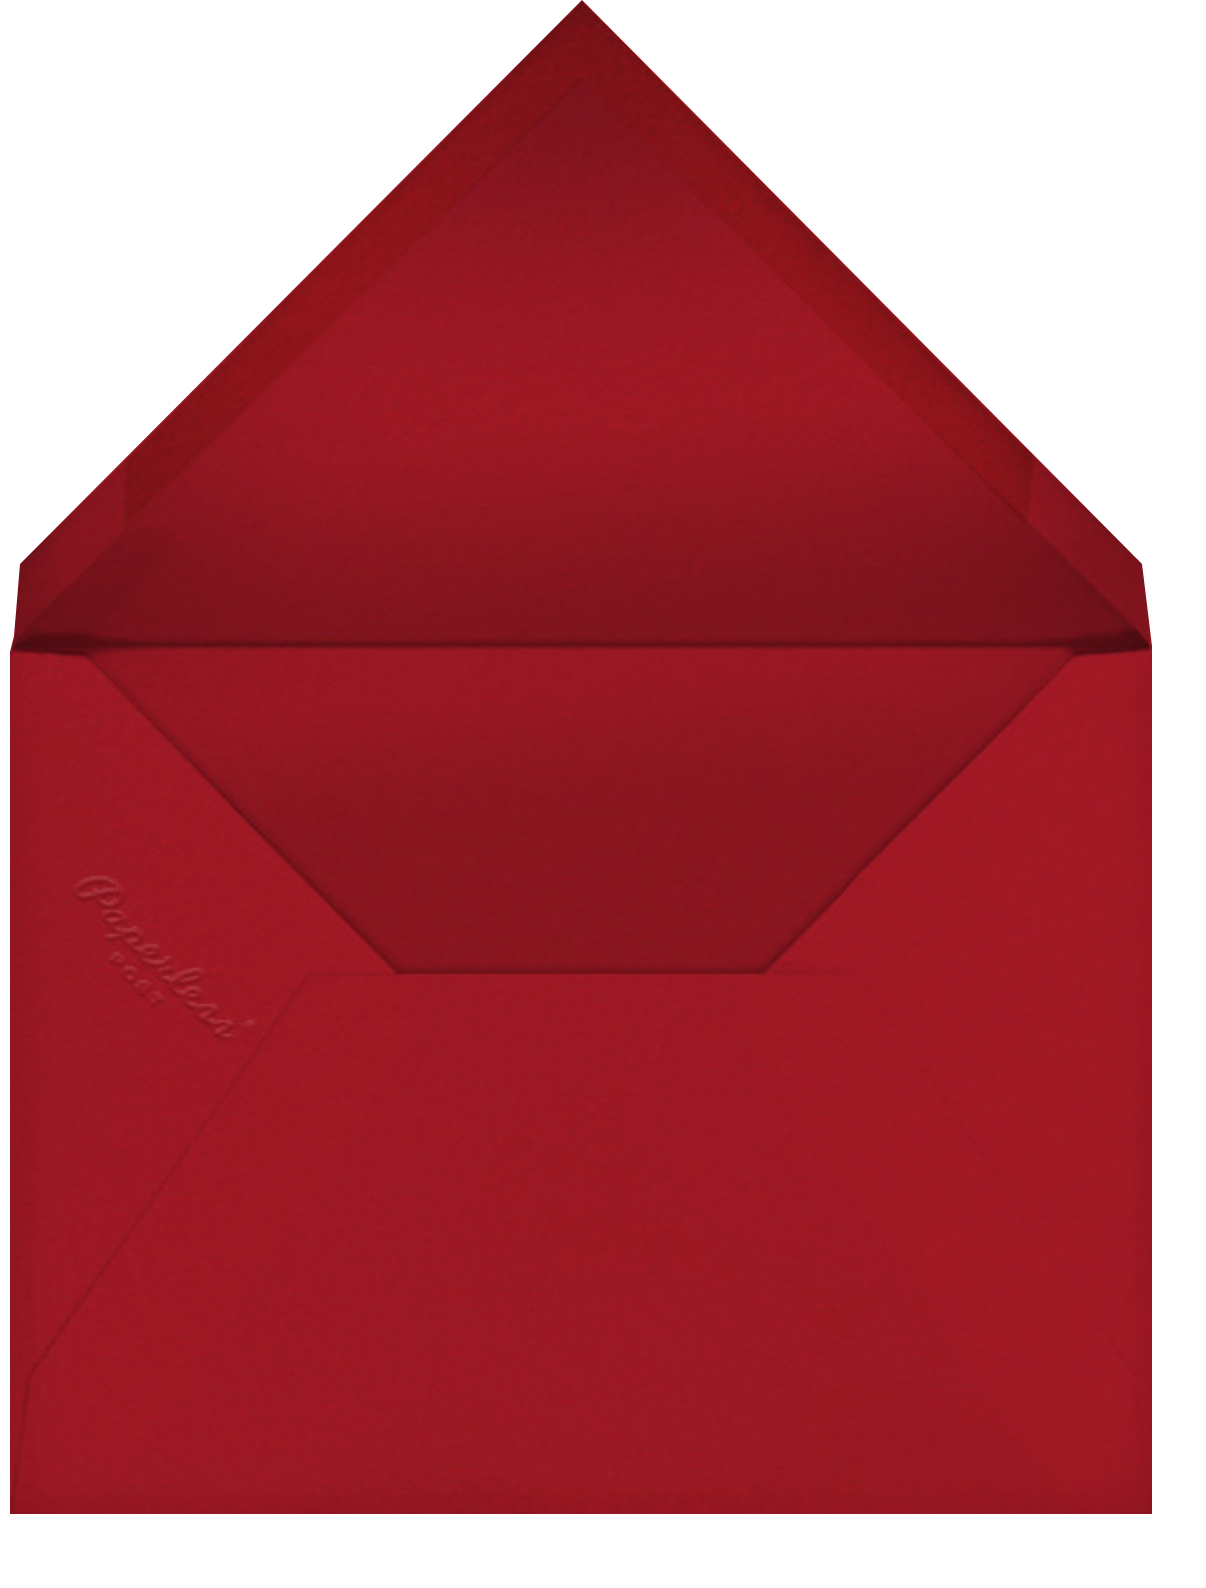 Plaid Hearts - Paperless Post - Envelope